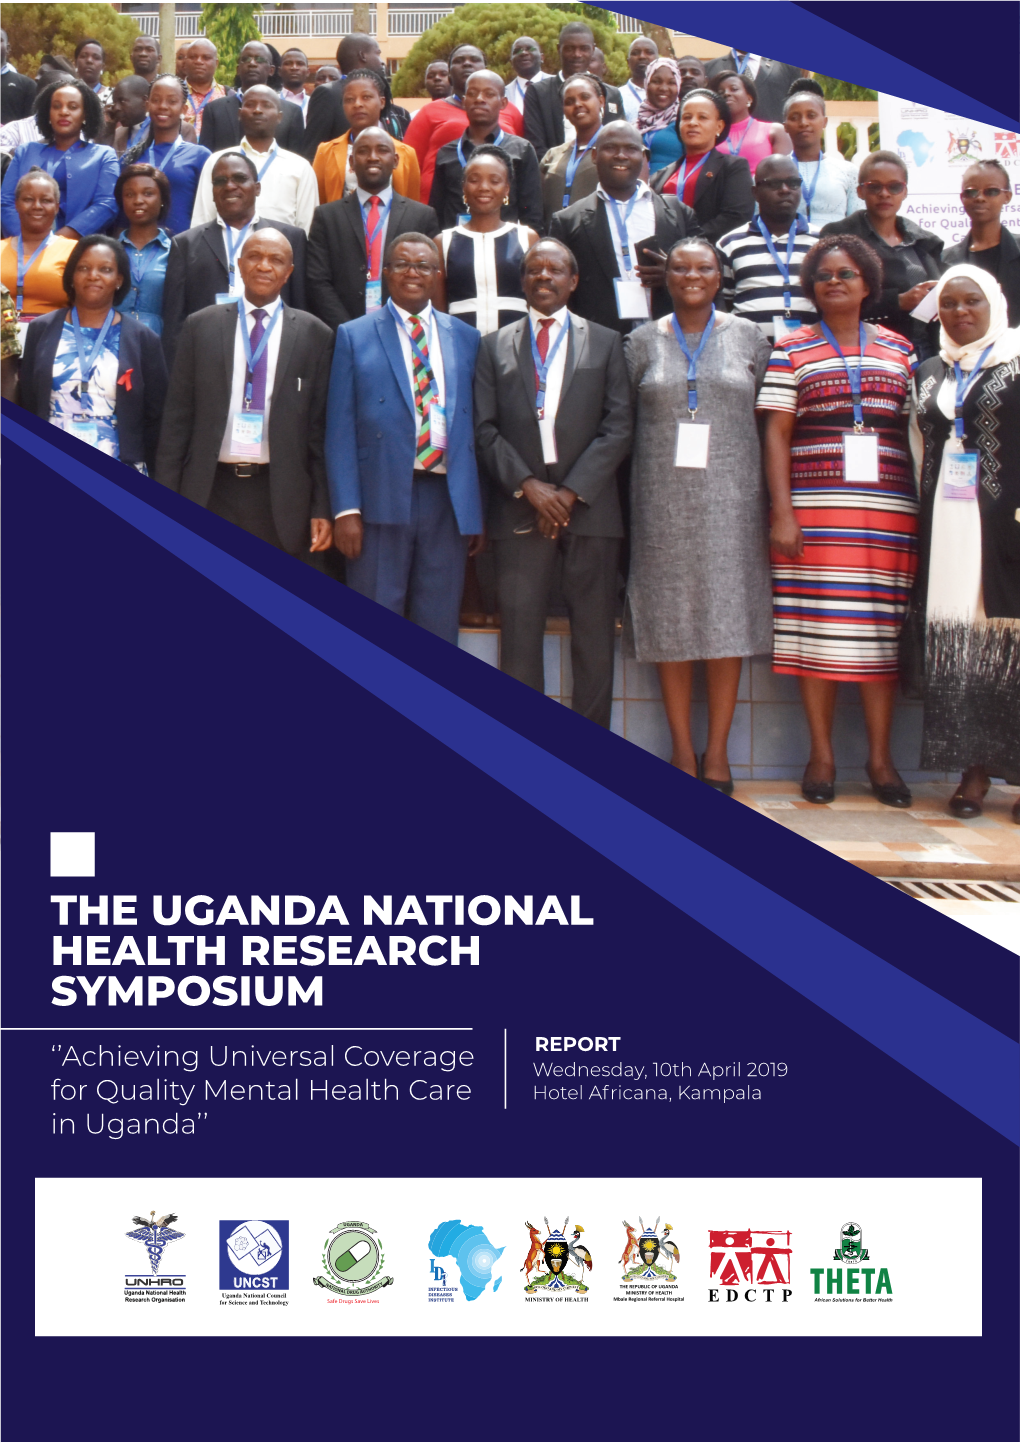 The Uganda National Health Research Symposium